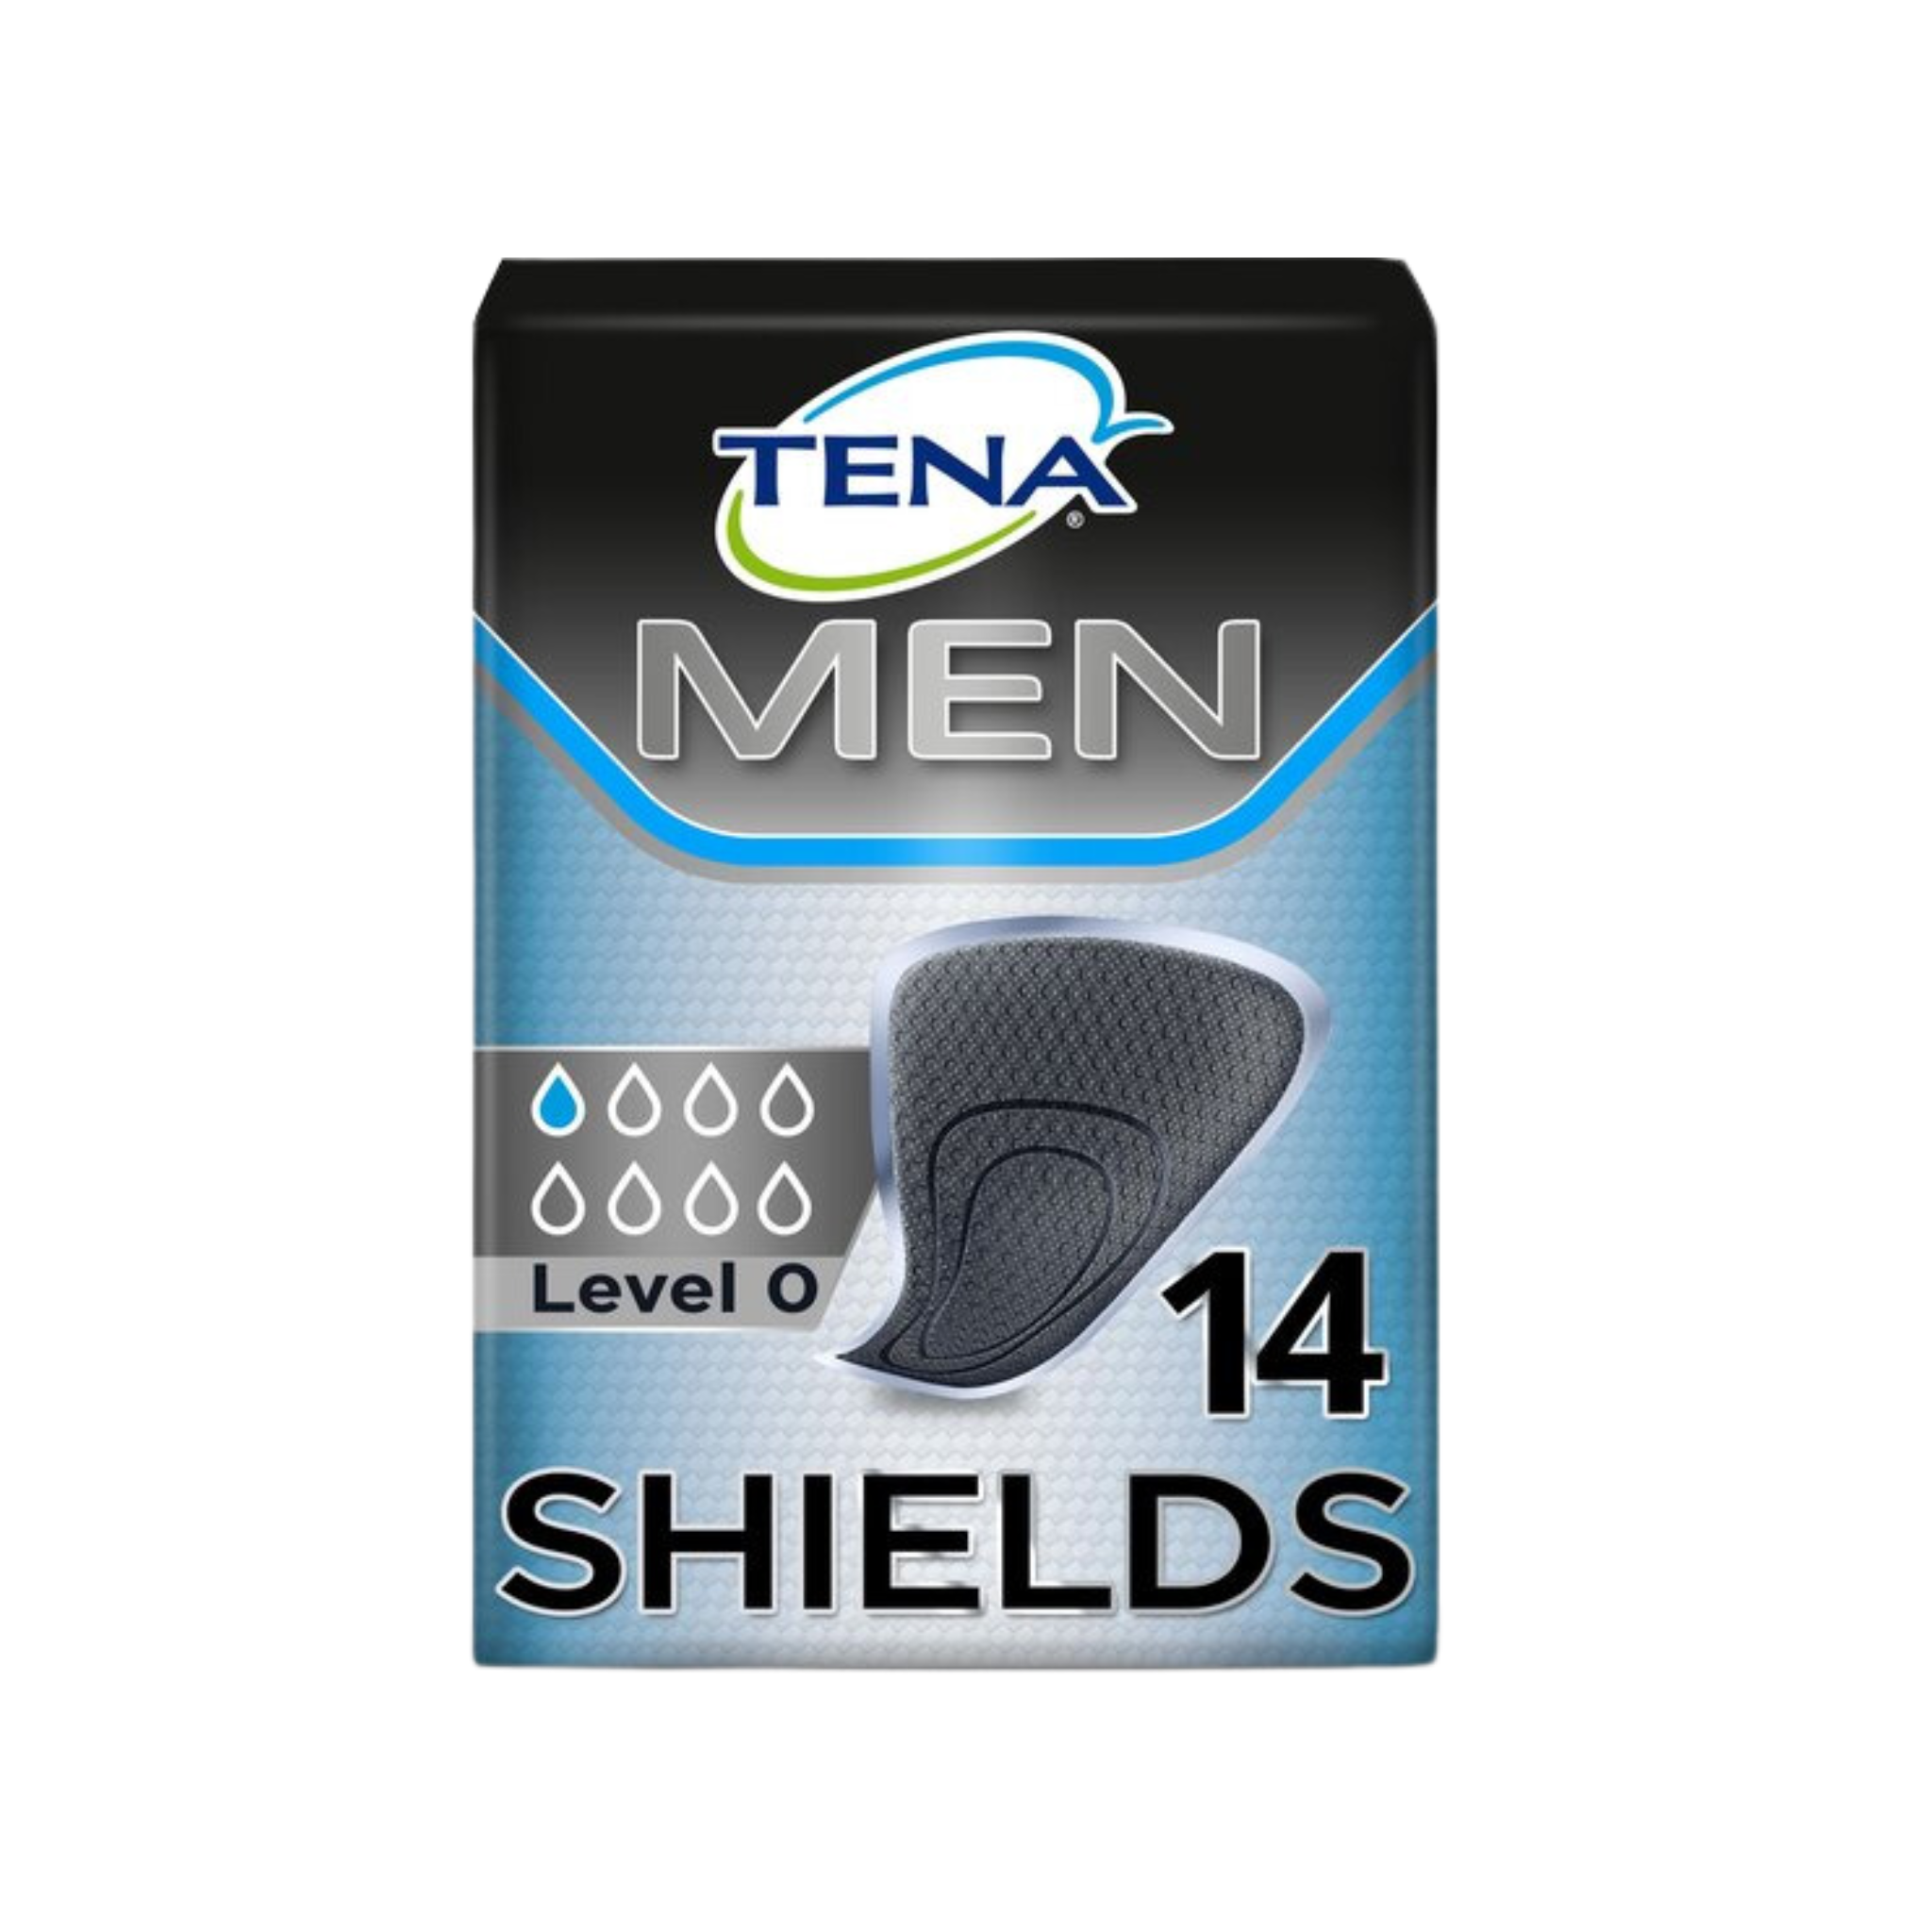 Tena Men Discreet Protection Shield 3x14's